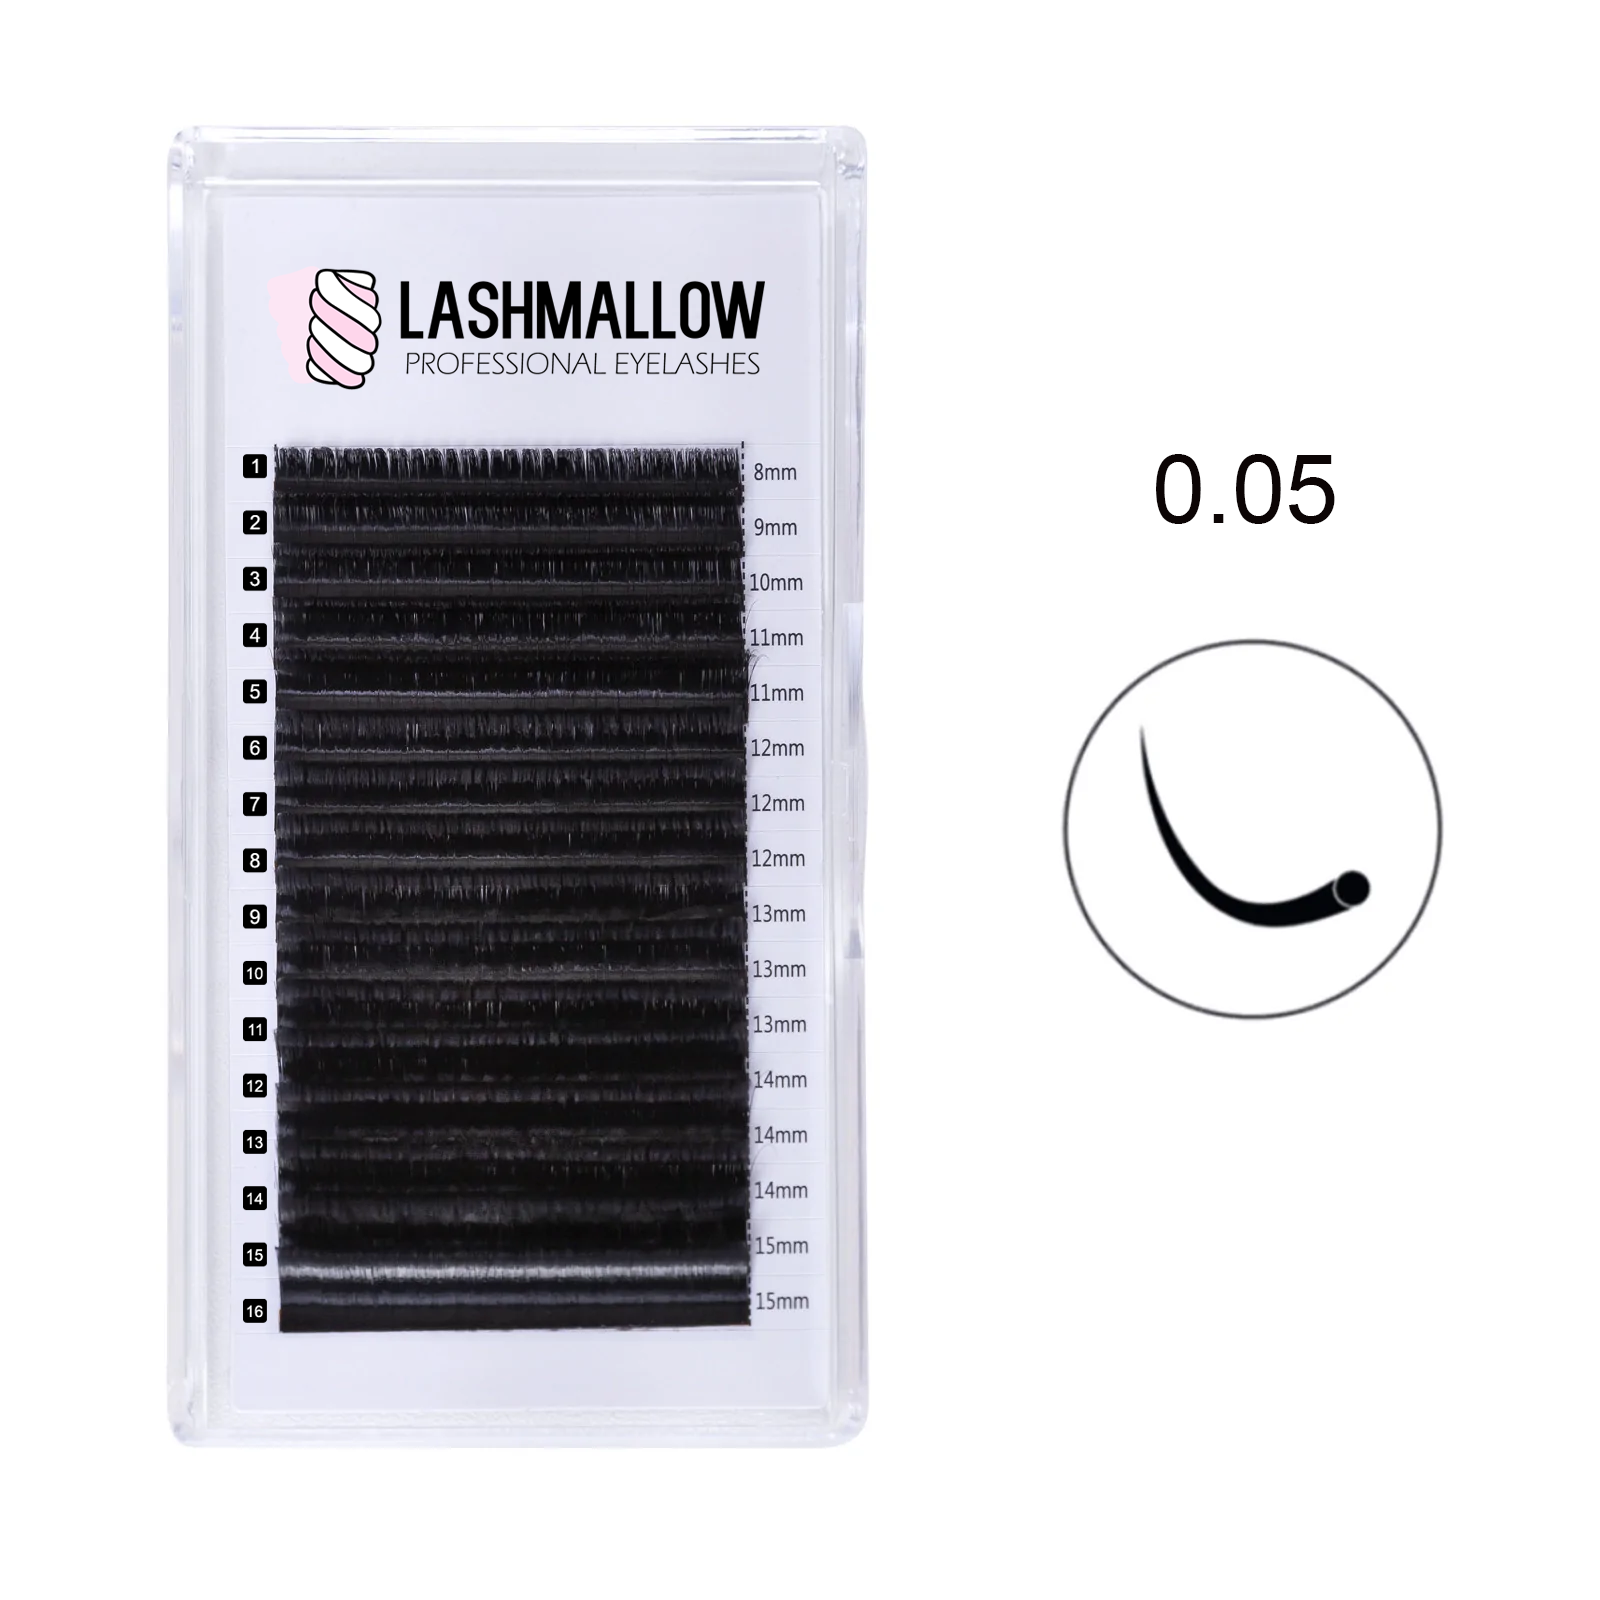 0.05 Premium Volume Lashes 8-16mm Eyelash Extension Trays